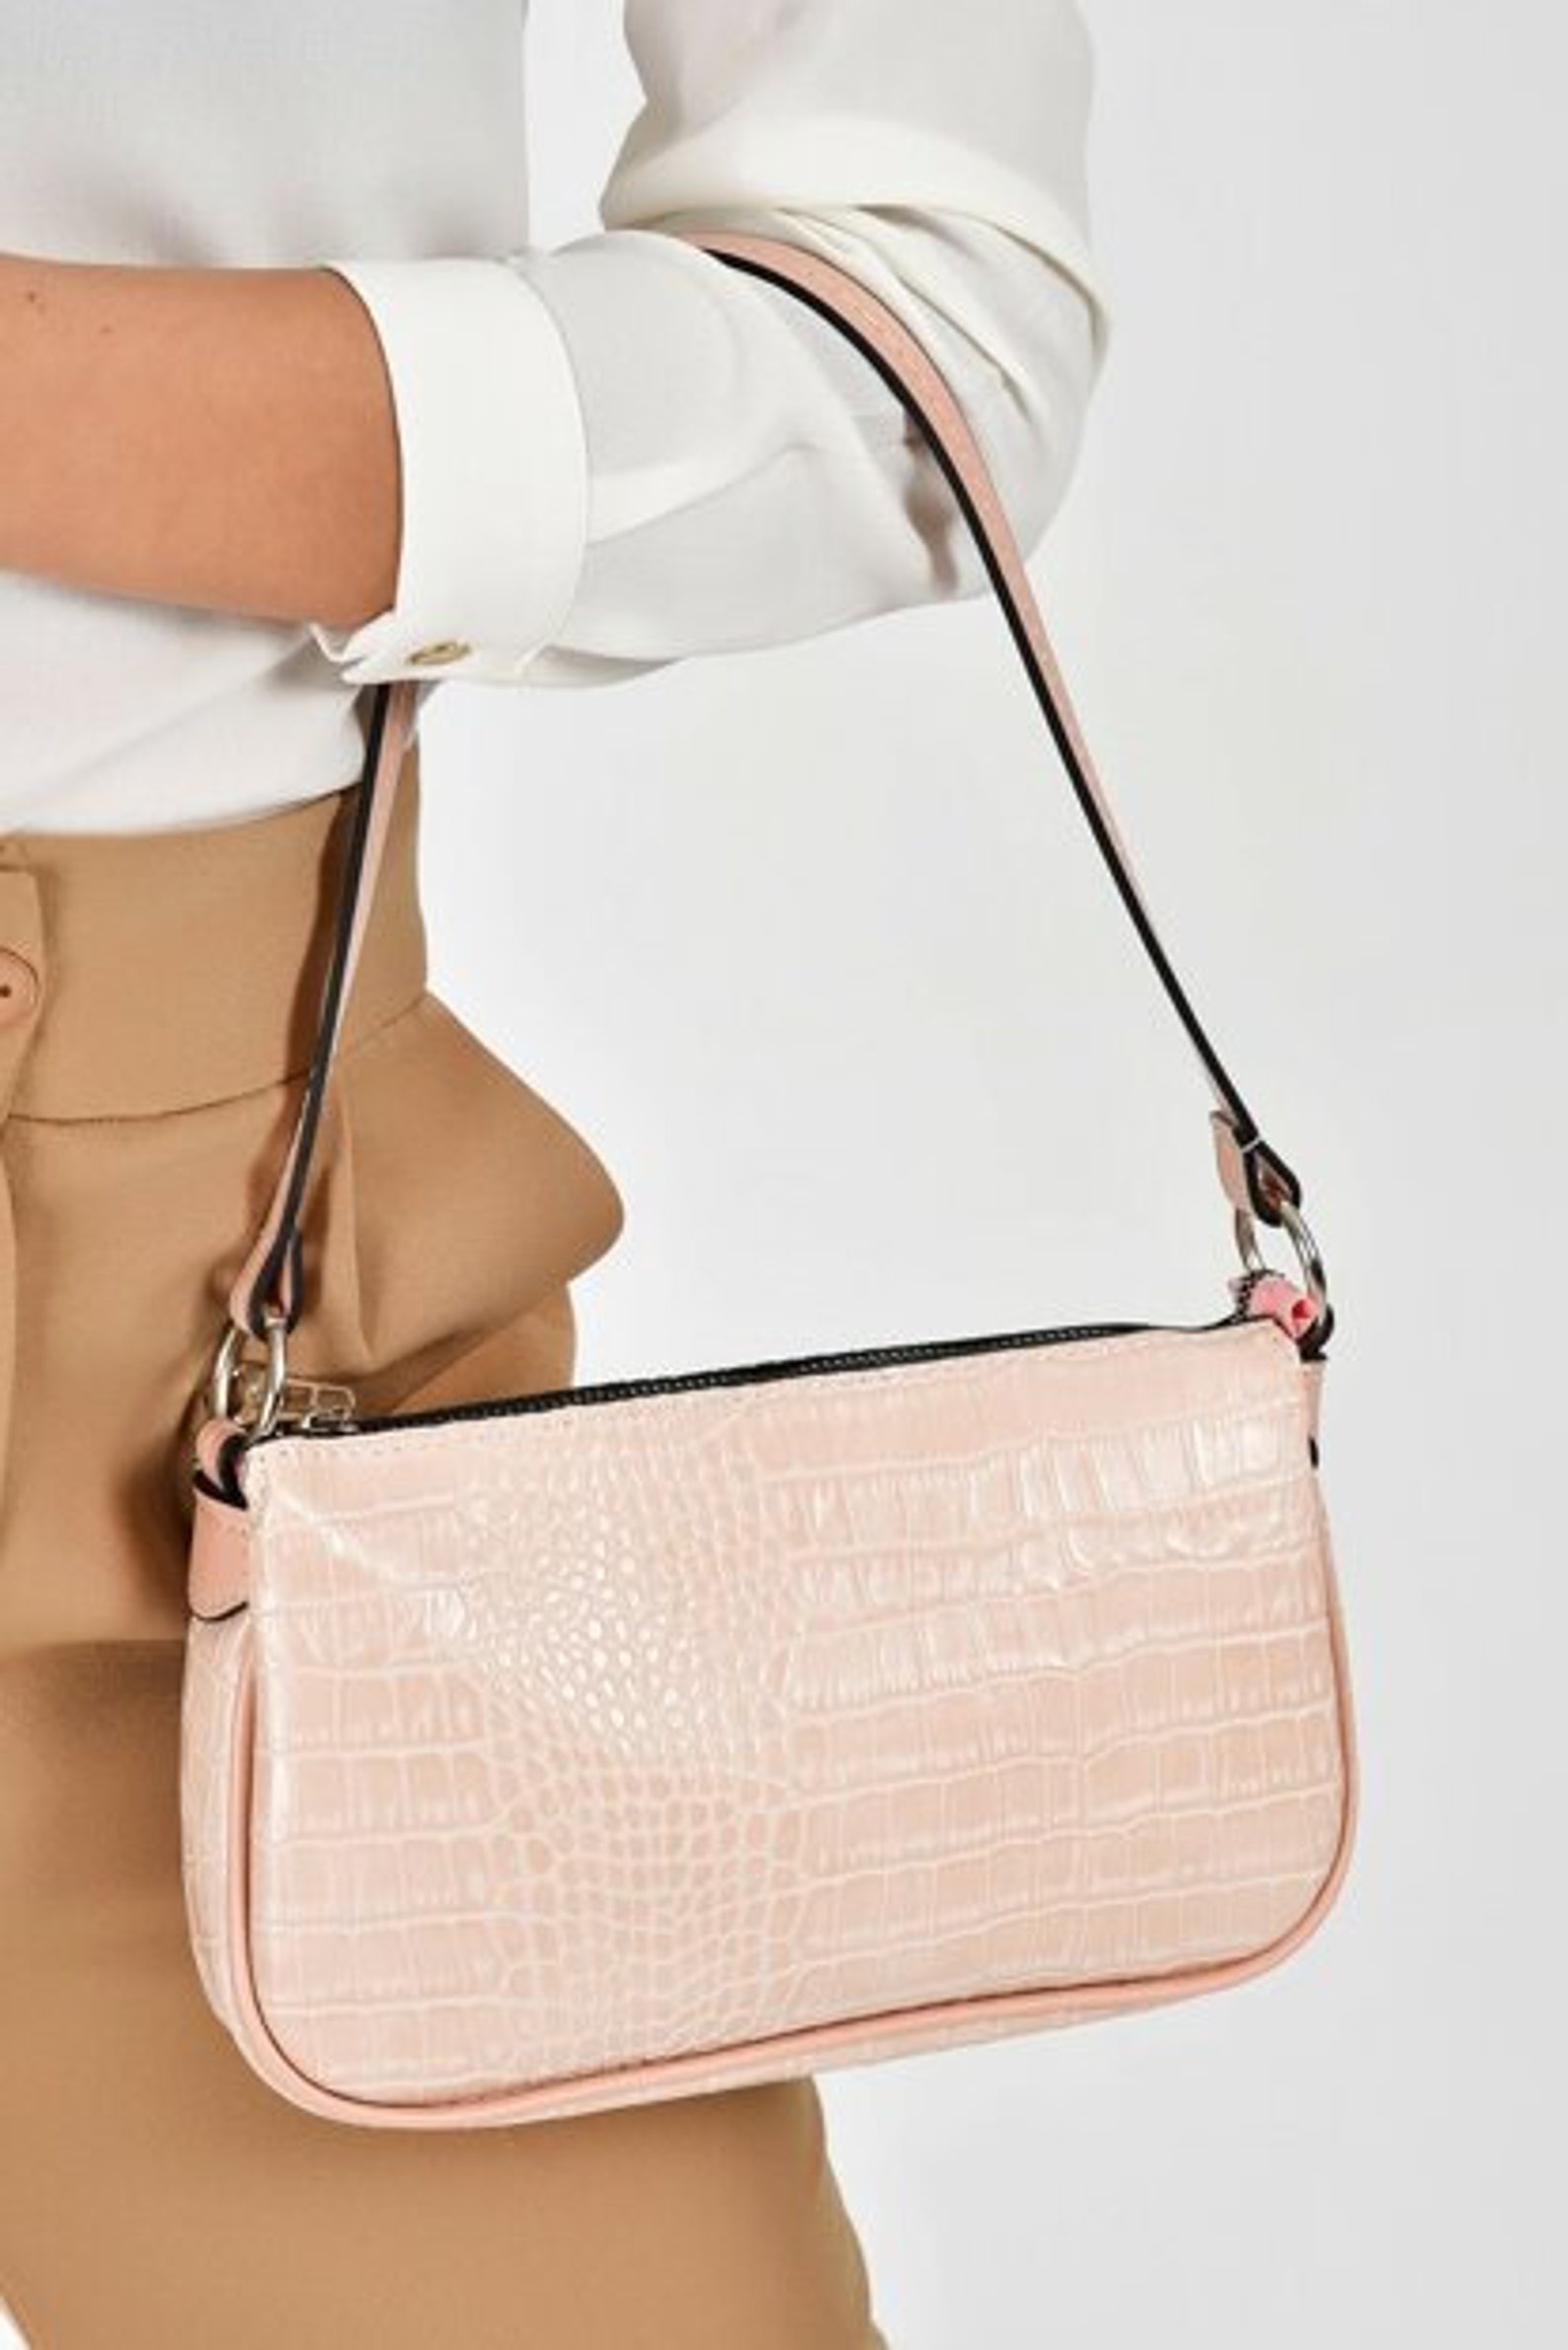 Baguette Bag Clutch Trendy Purses For Women Handbag With | Etsy